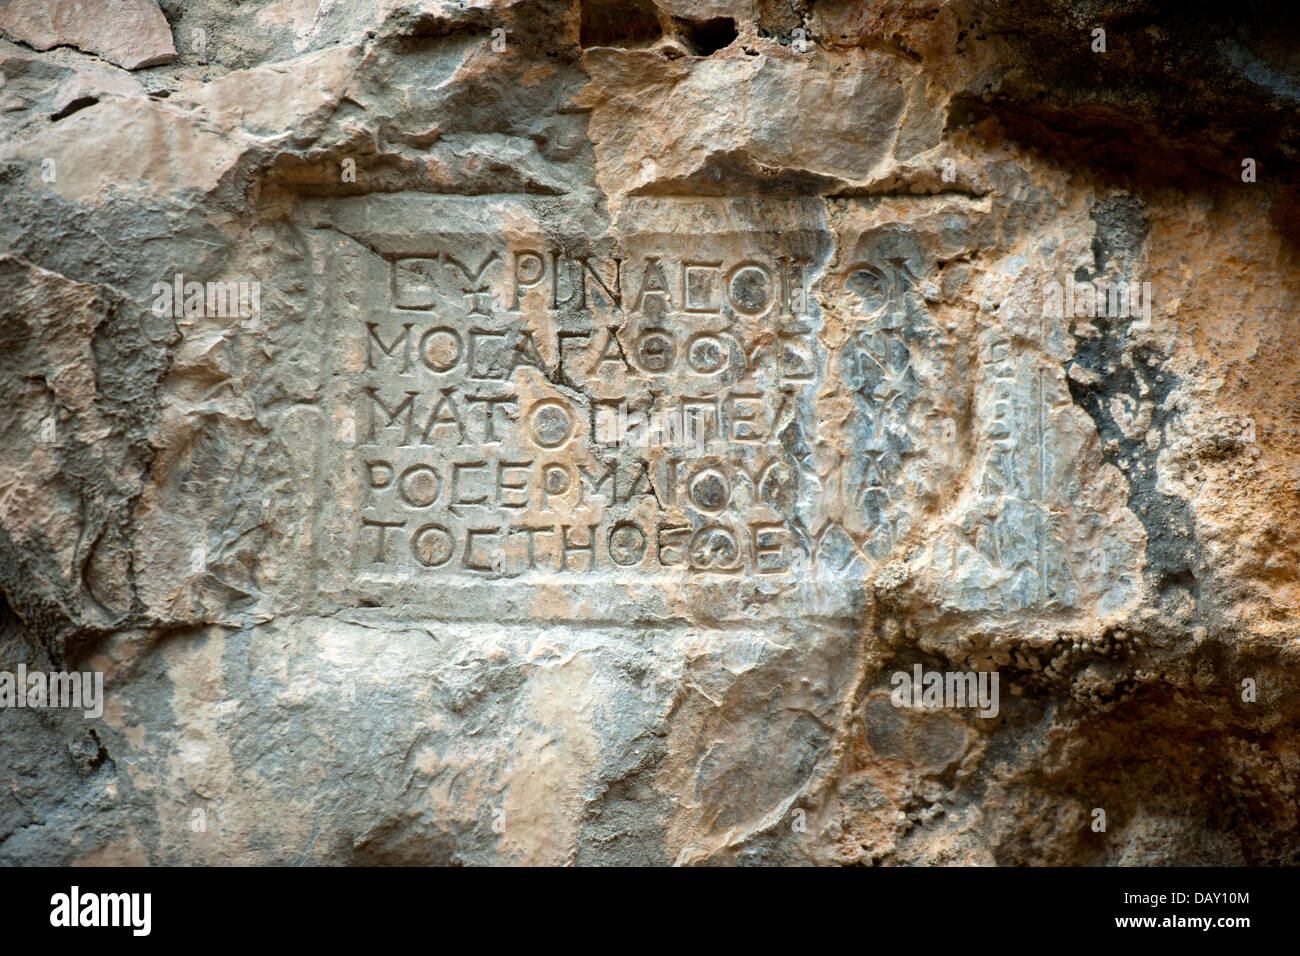 Türkei, Provinz Antalya, Dösemealti, Dorf Yagca, griechische Inschrift am Felsen vor der Höhle Karain Foto Stock